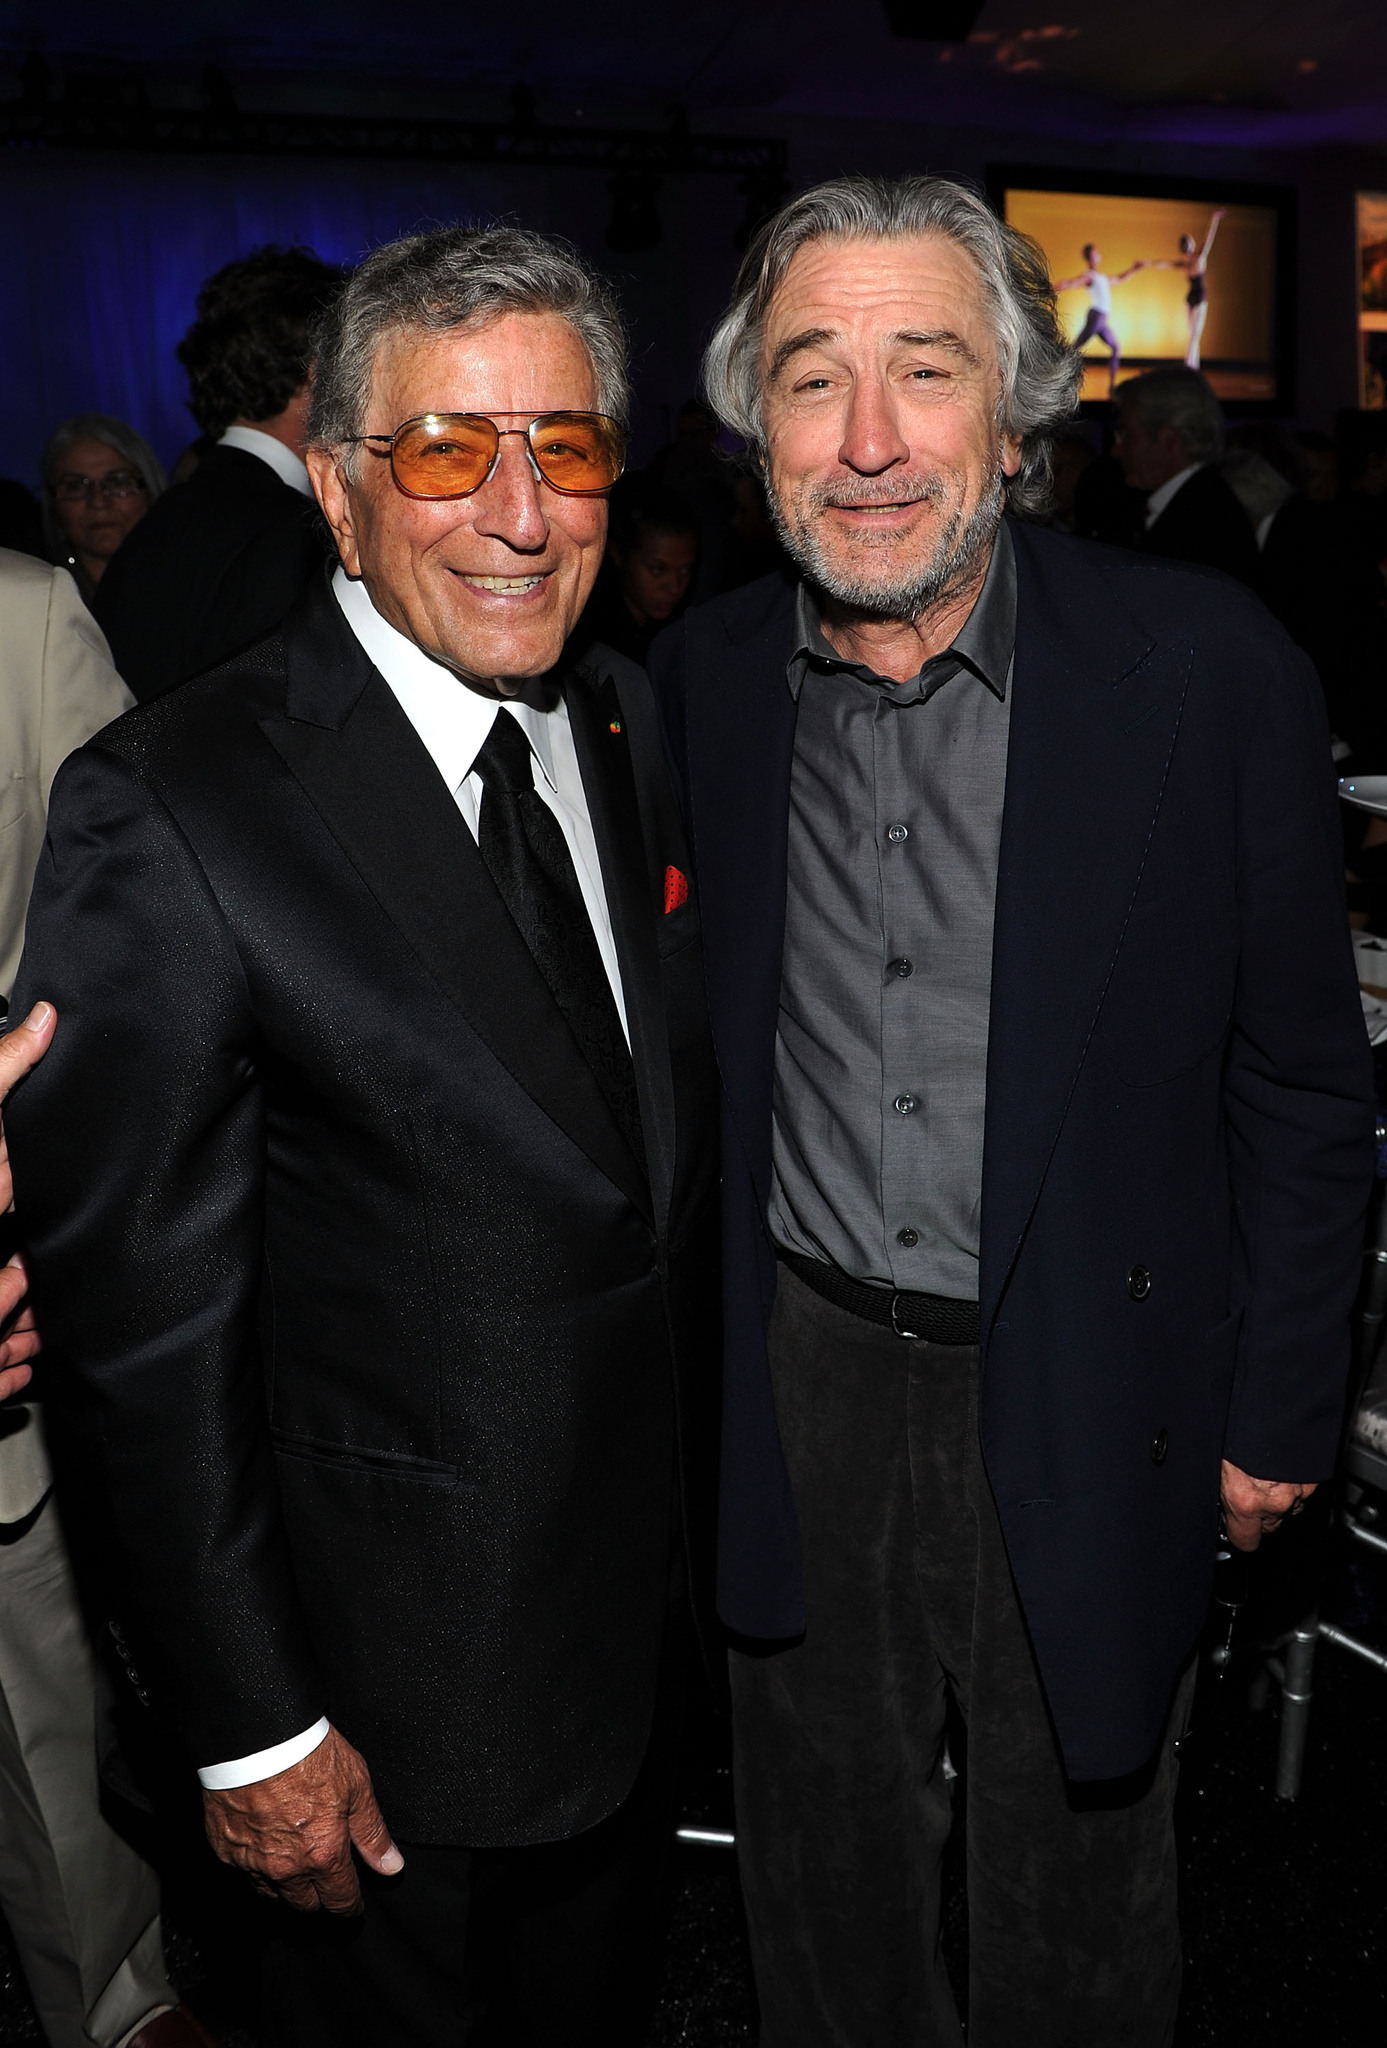 Robert De Niro and Tony Bennett